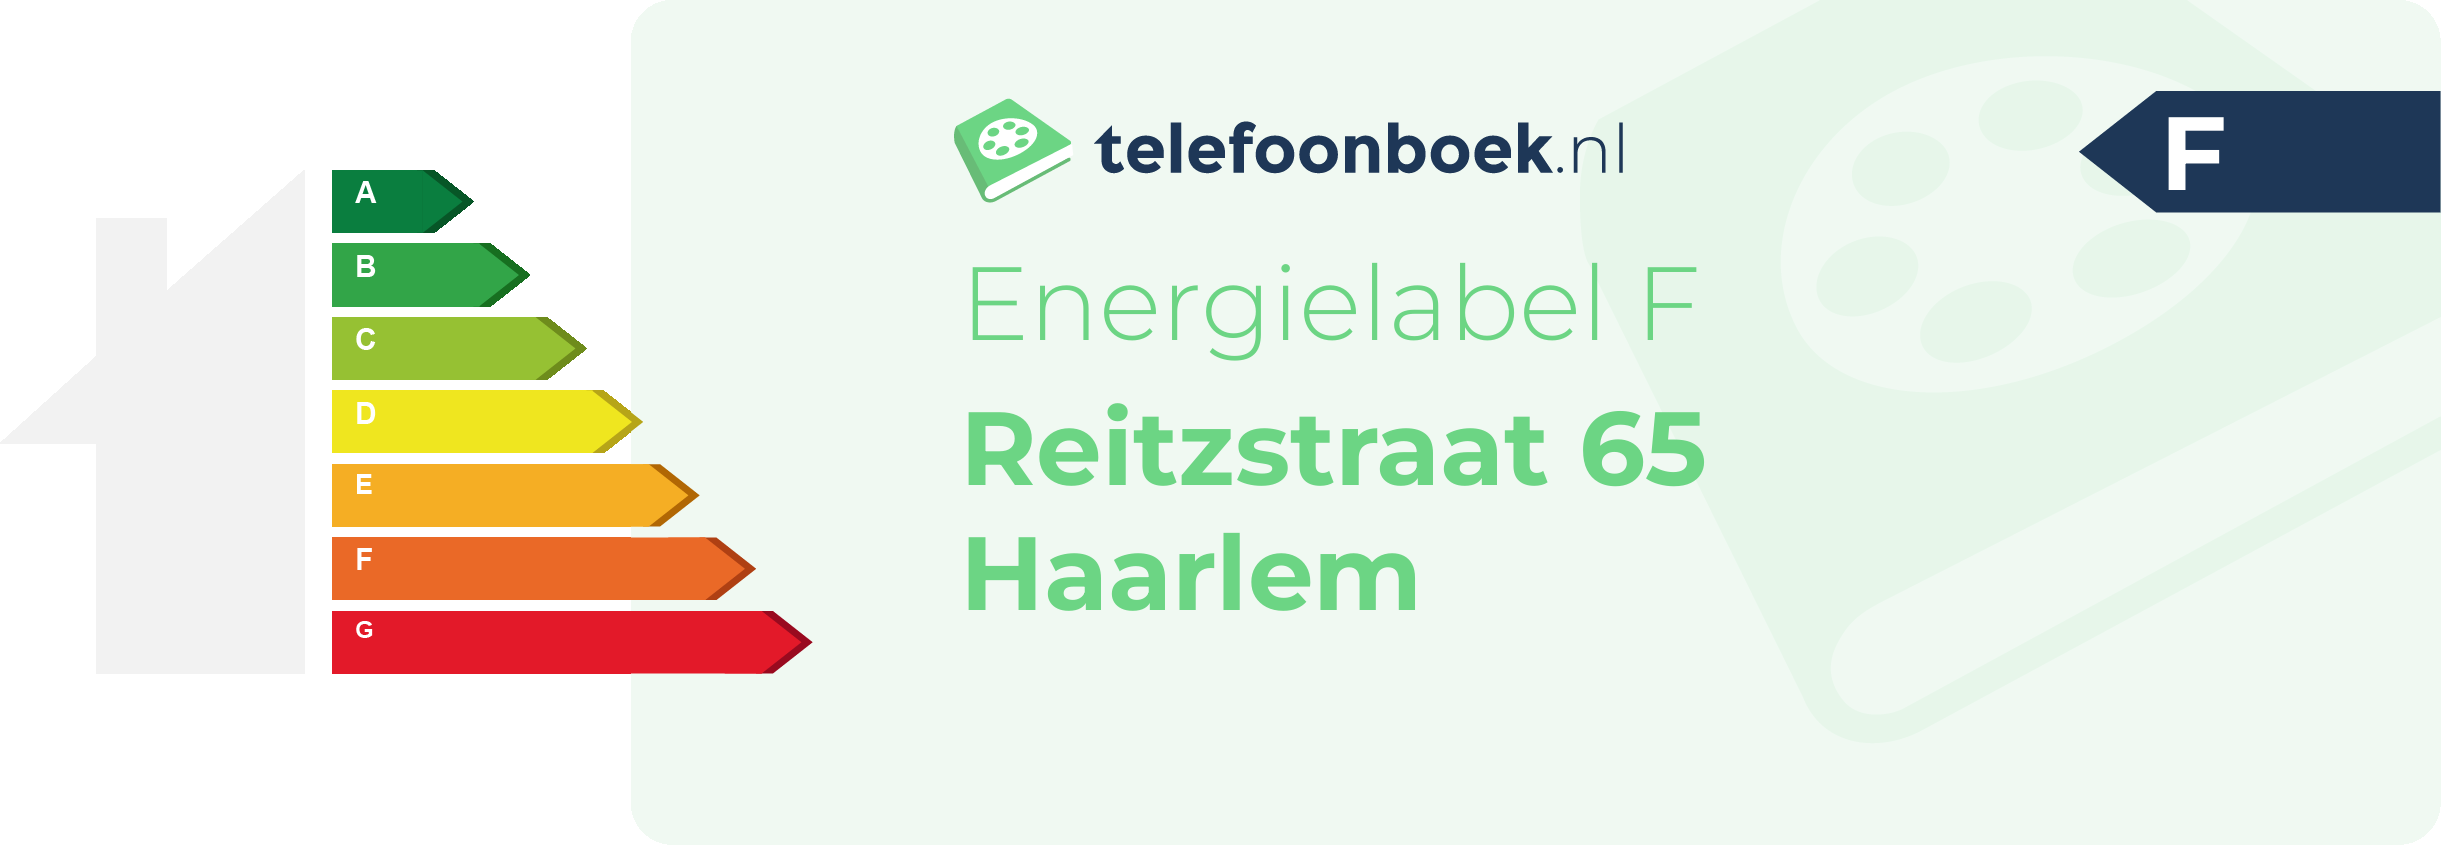 Energielabel Reitzstraat 65 Haarlem